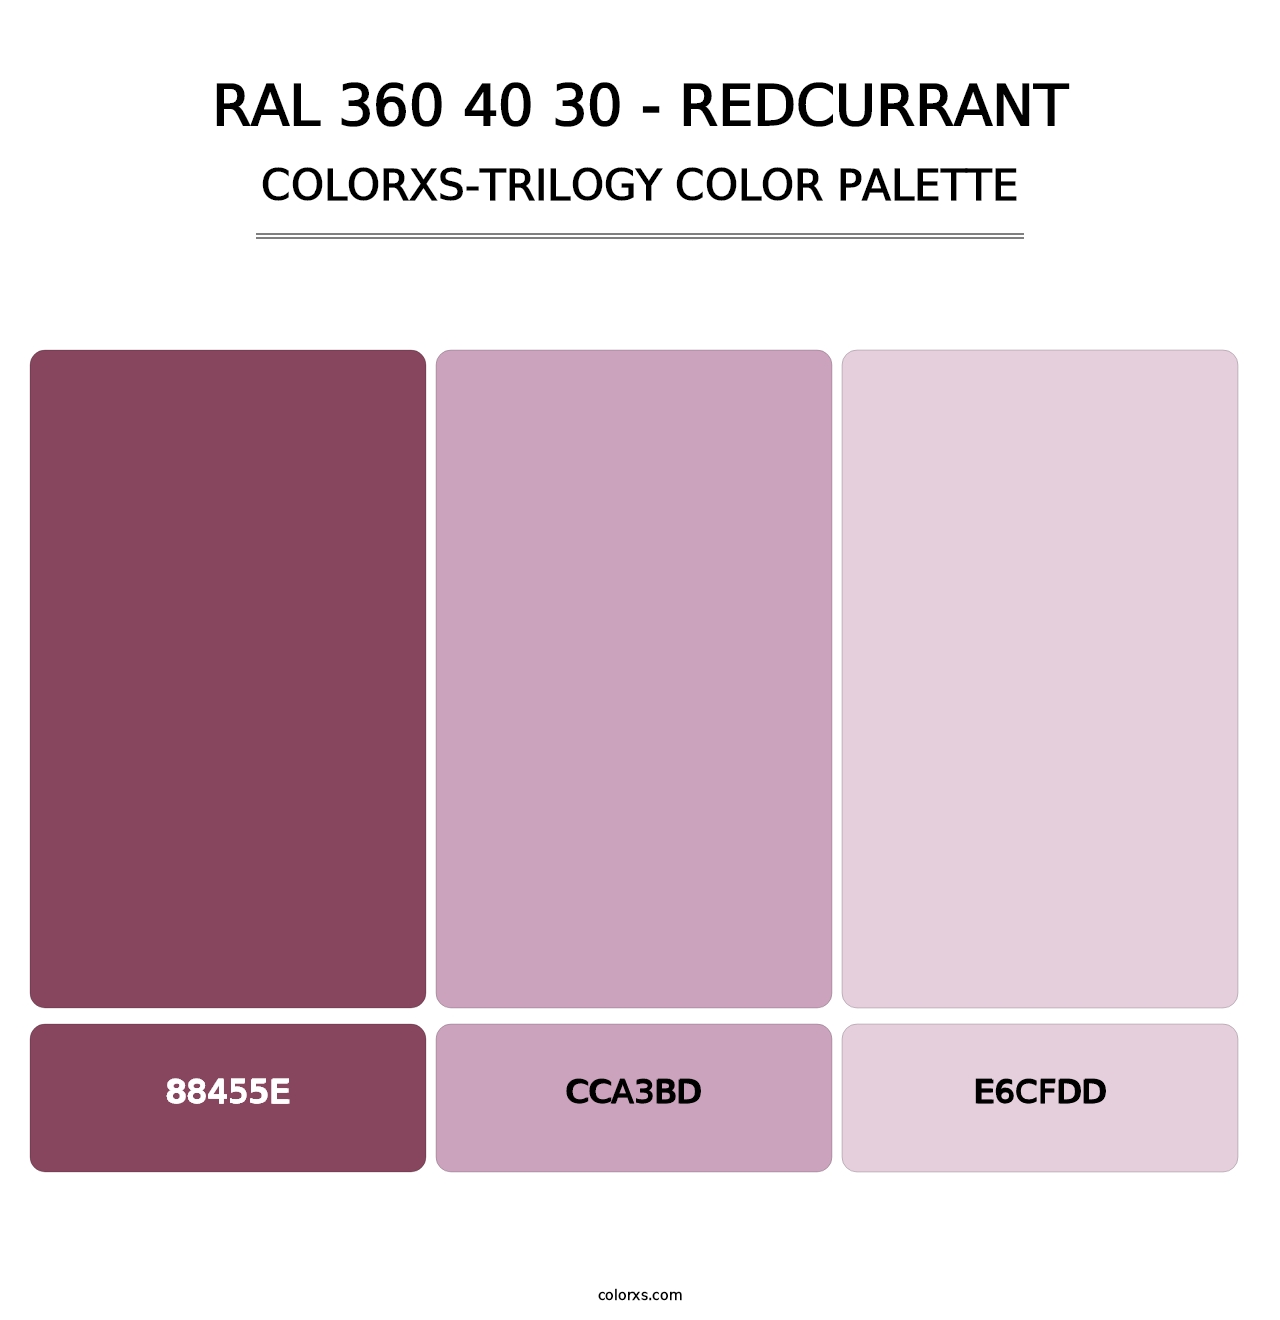 RAL 360 40 30 - Redcurrant - Colorxs Trilogy Palette